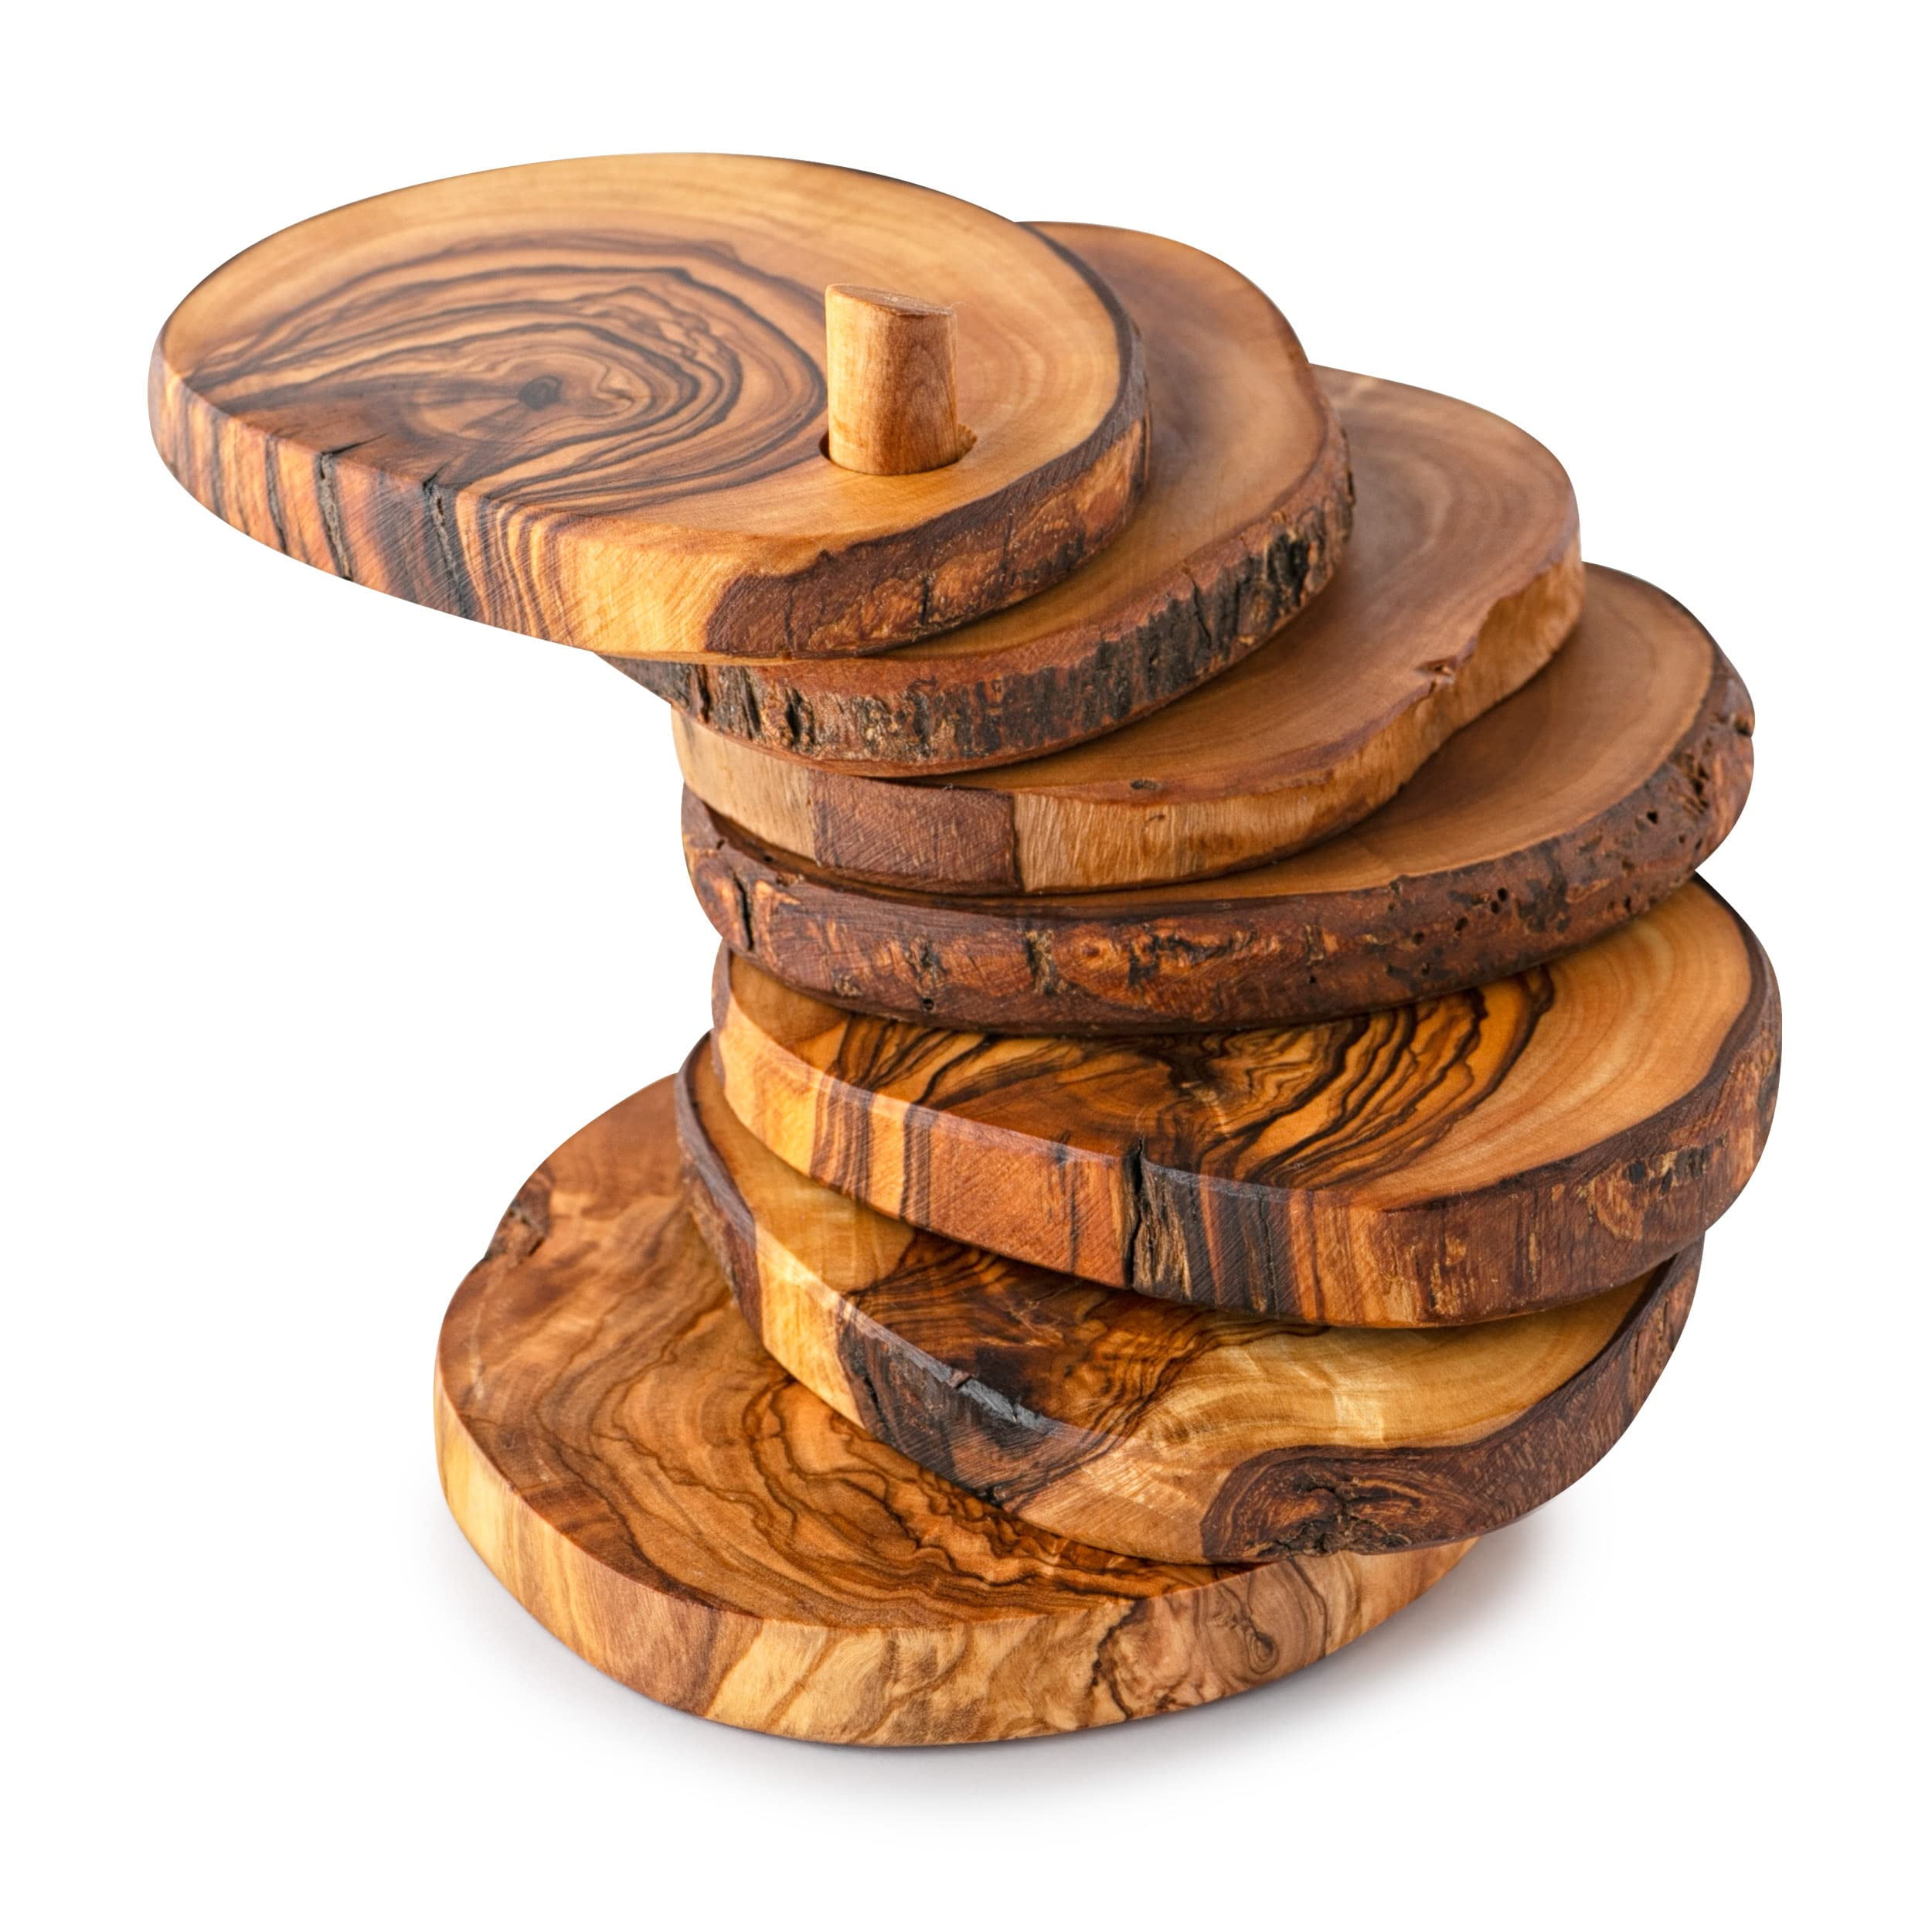 DIY Wooden Chevron Coasters - Handmade with Ashley